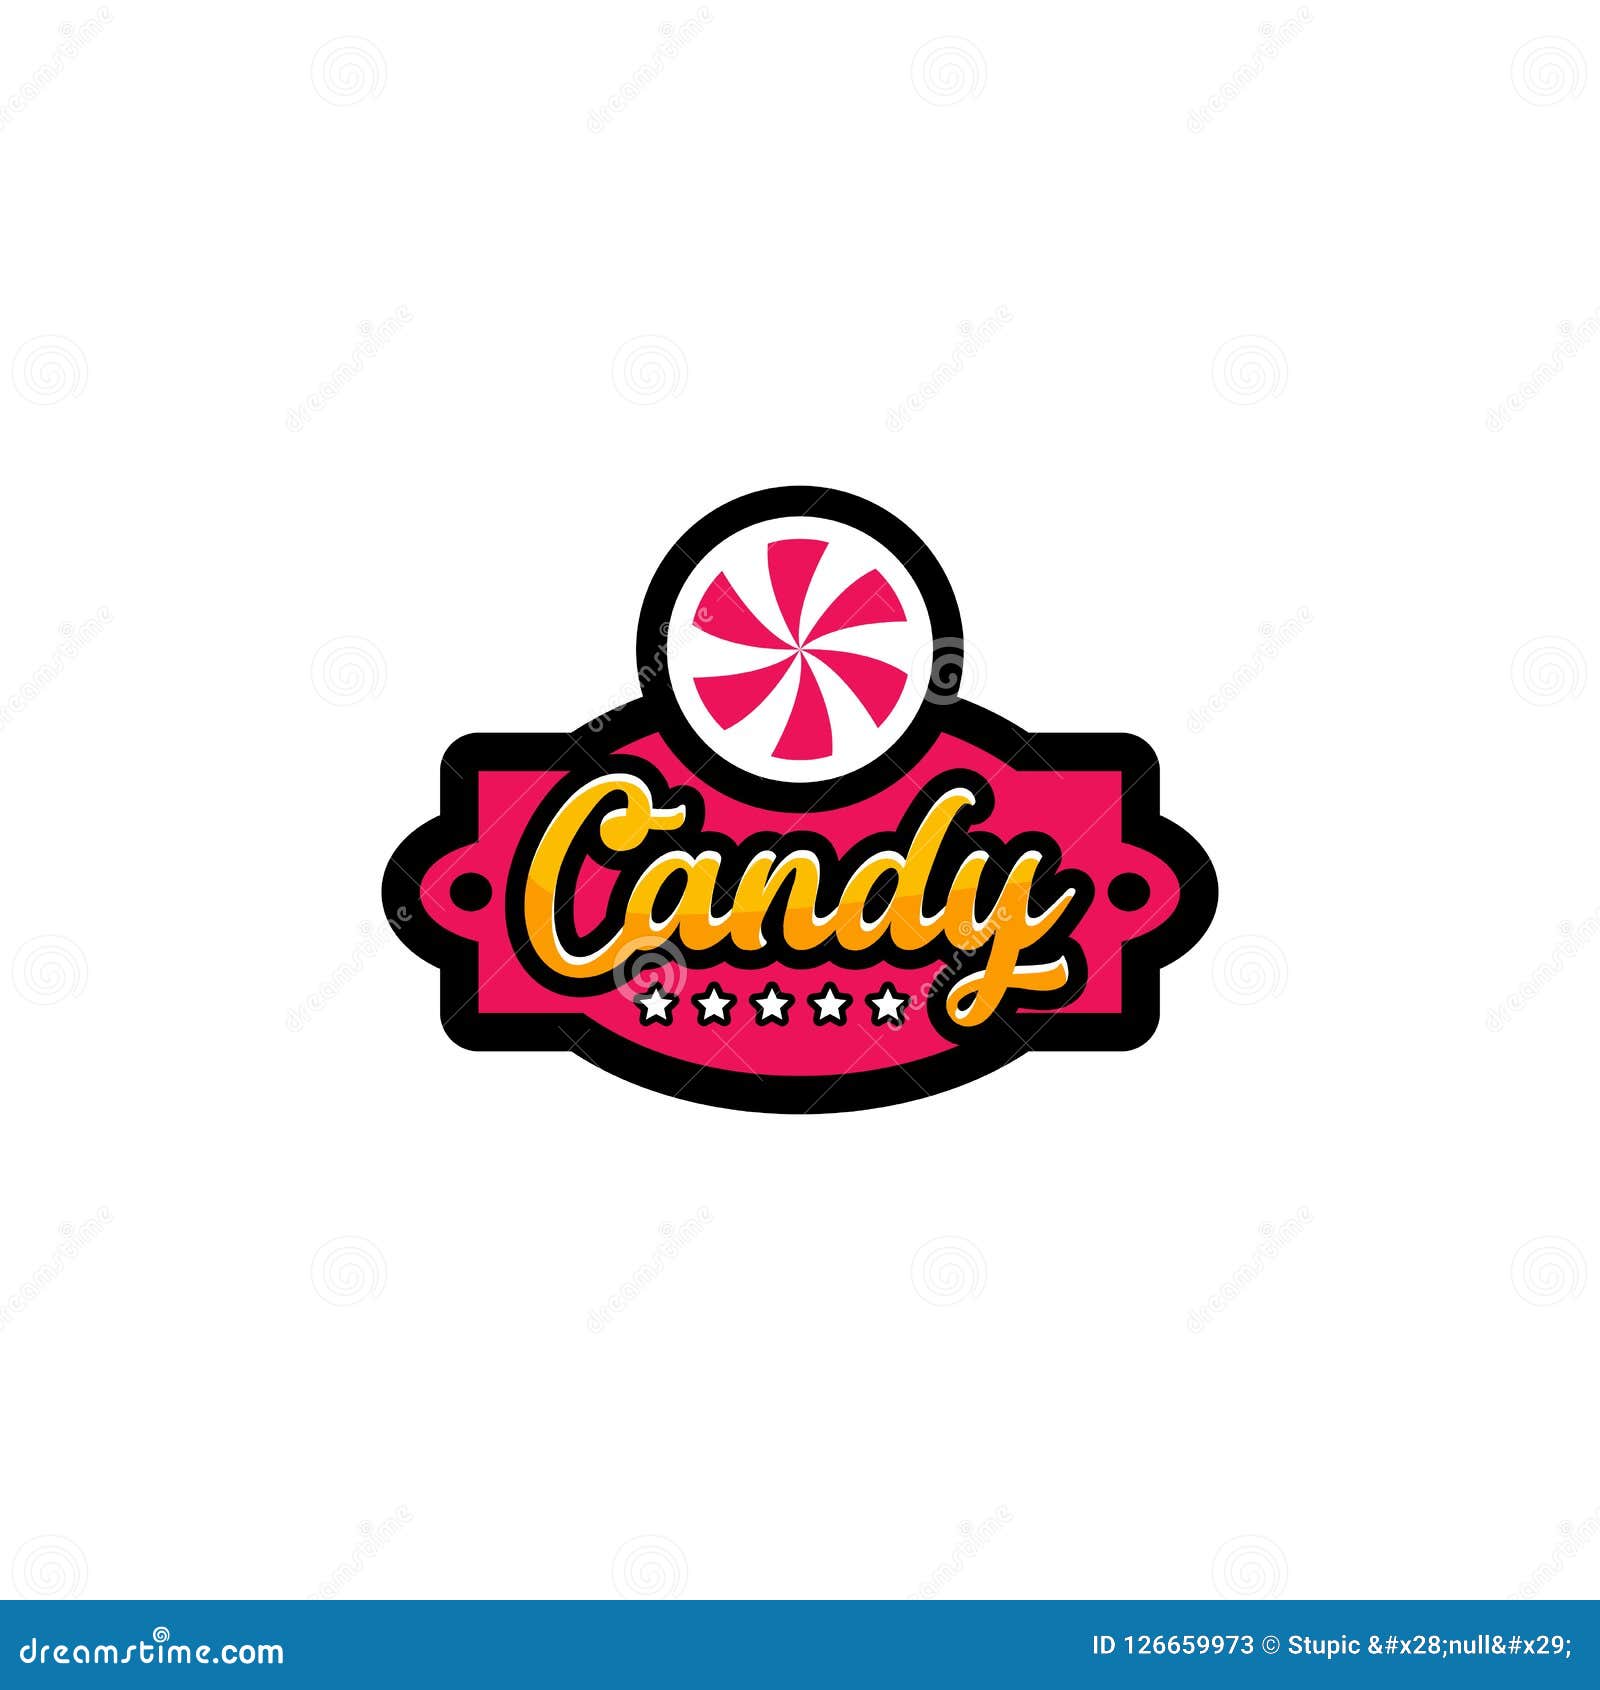 Creative Candy Logo Design Vector Art Logo Stock Image | CartoonDealer ...